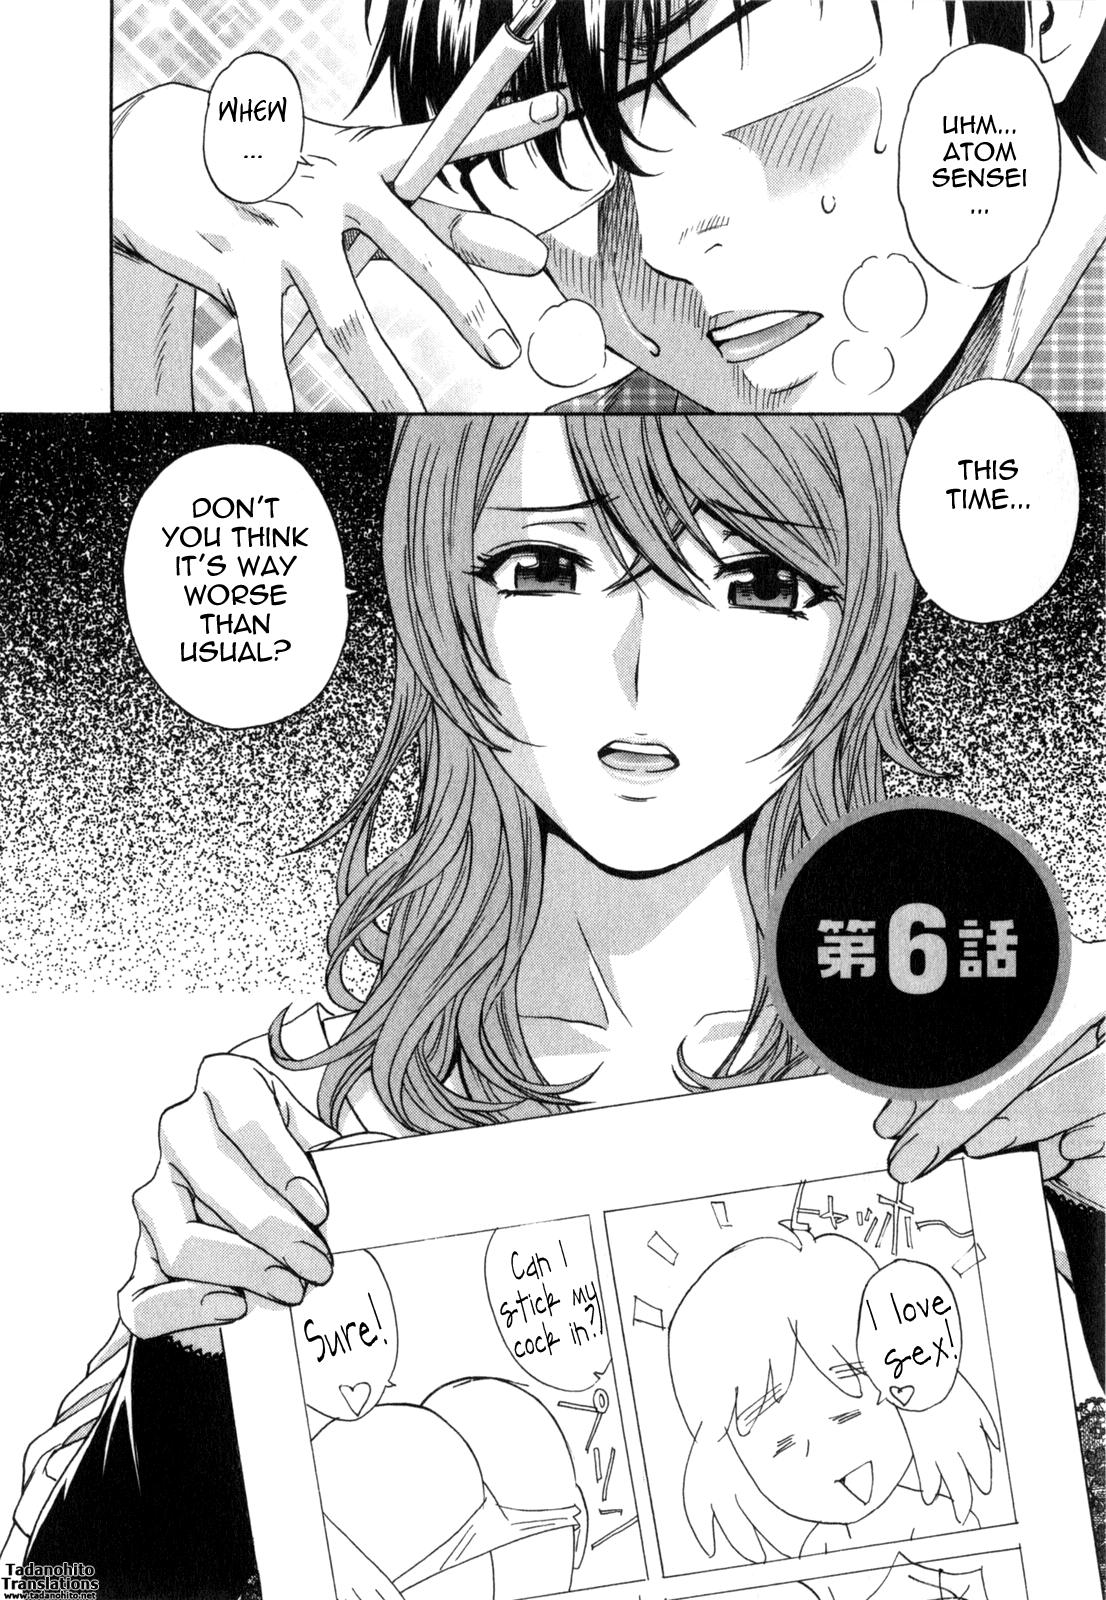 [Hidemaru] Life with Married Women Just Like a Manga 3 - Ch. 1-7 [English] {Tadanohito} 108